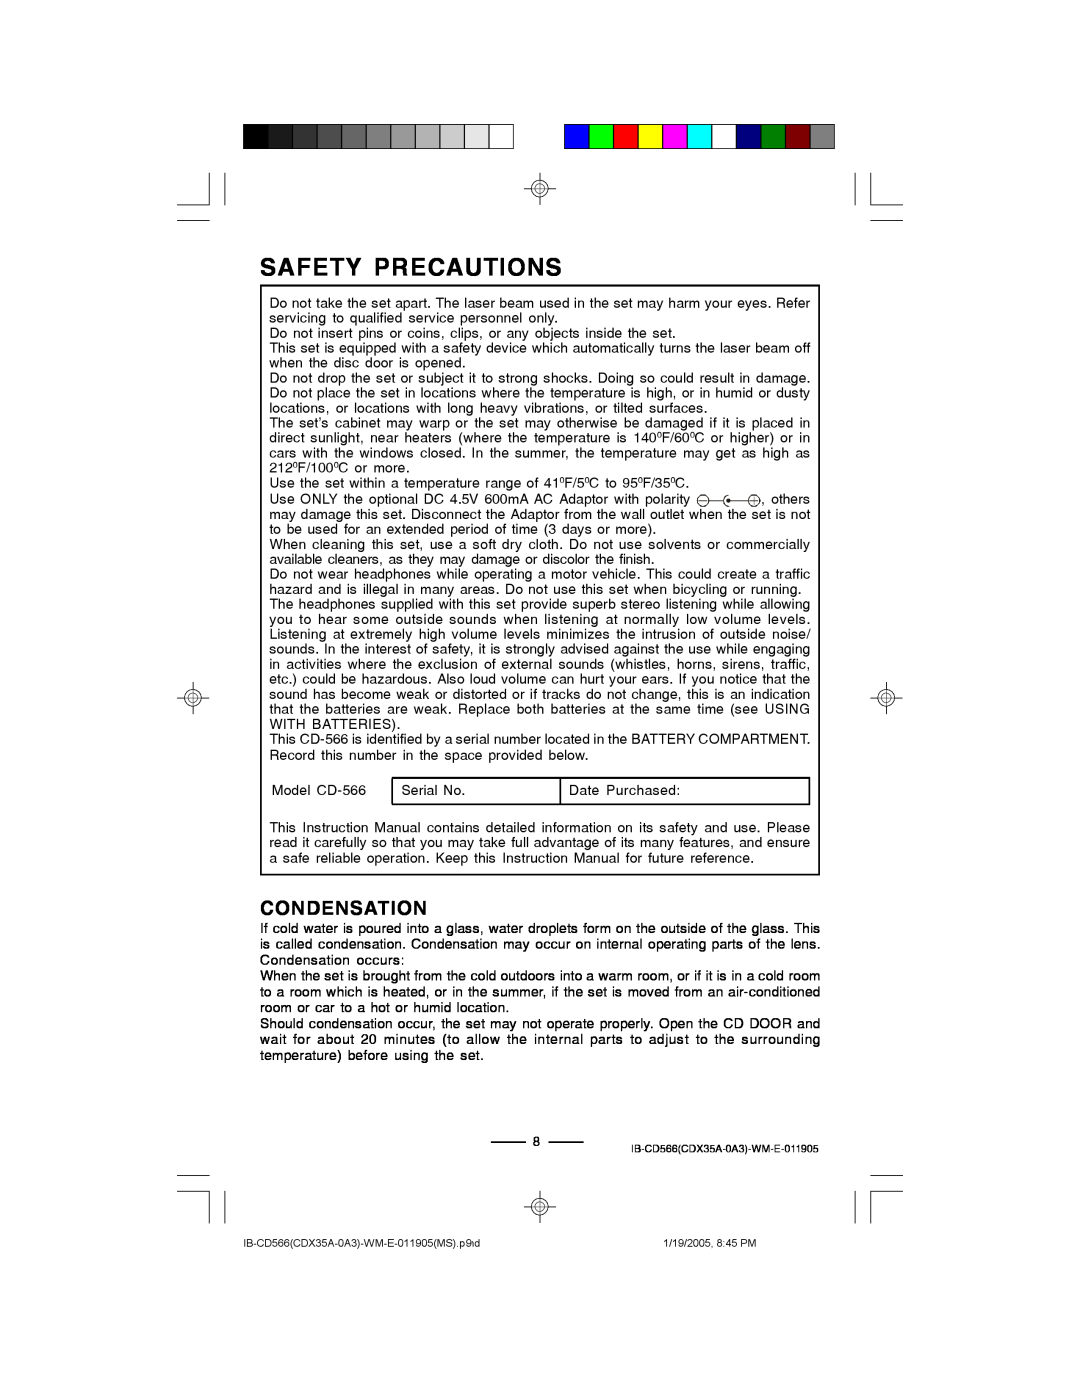 Lenoxx Electronics CD-566 manual Safety Precautions, Condensation 